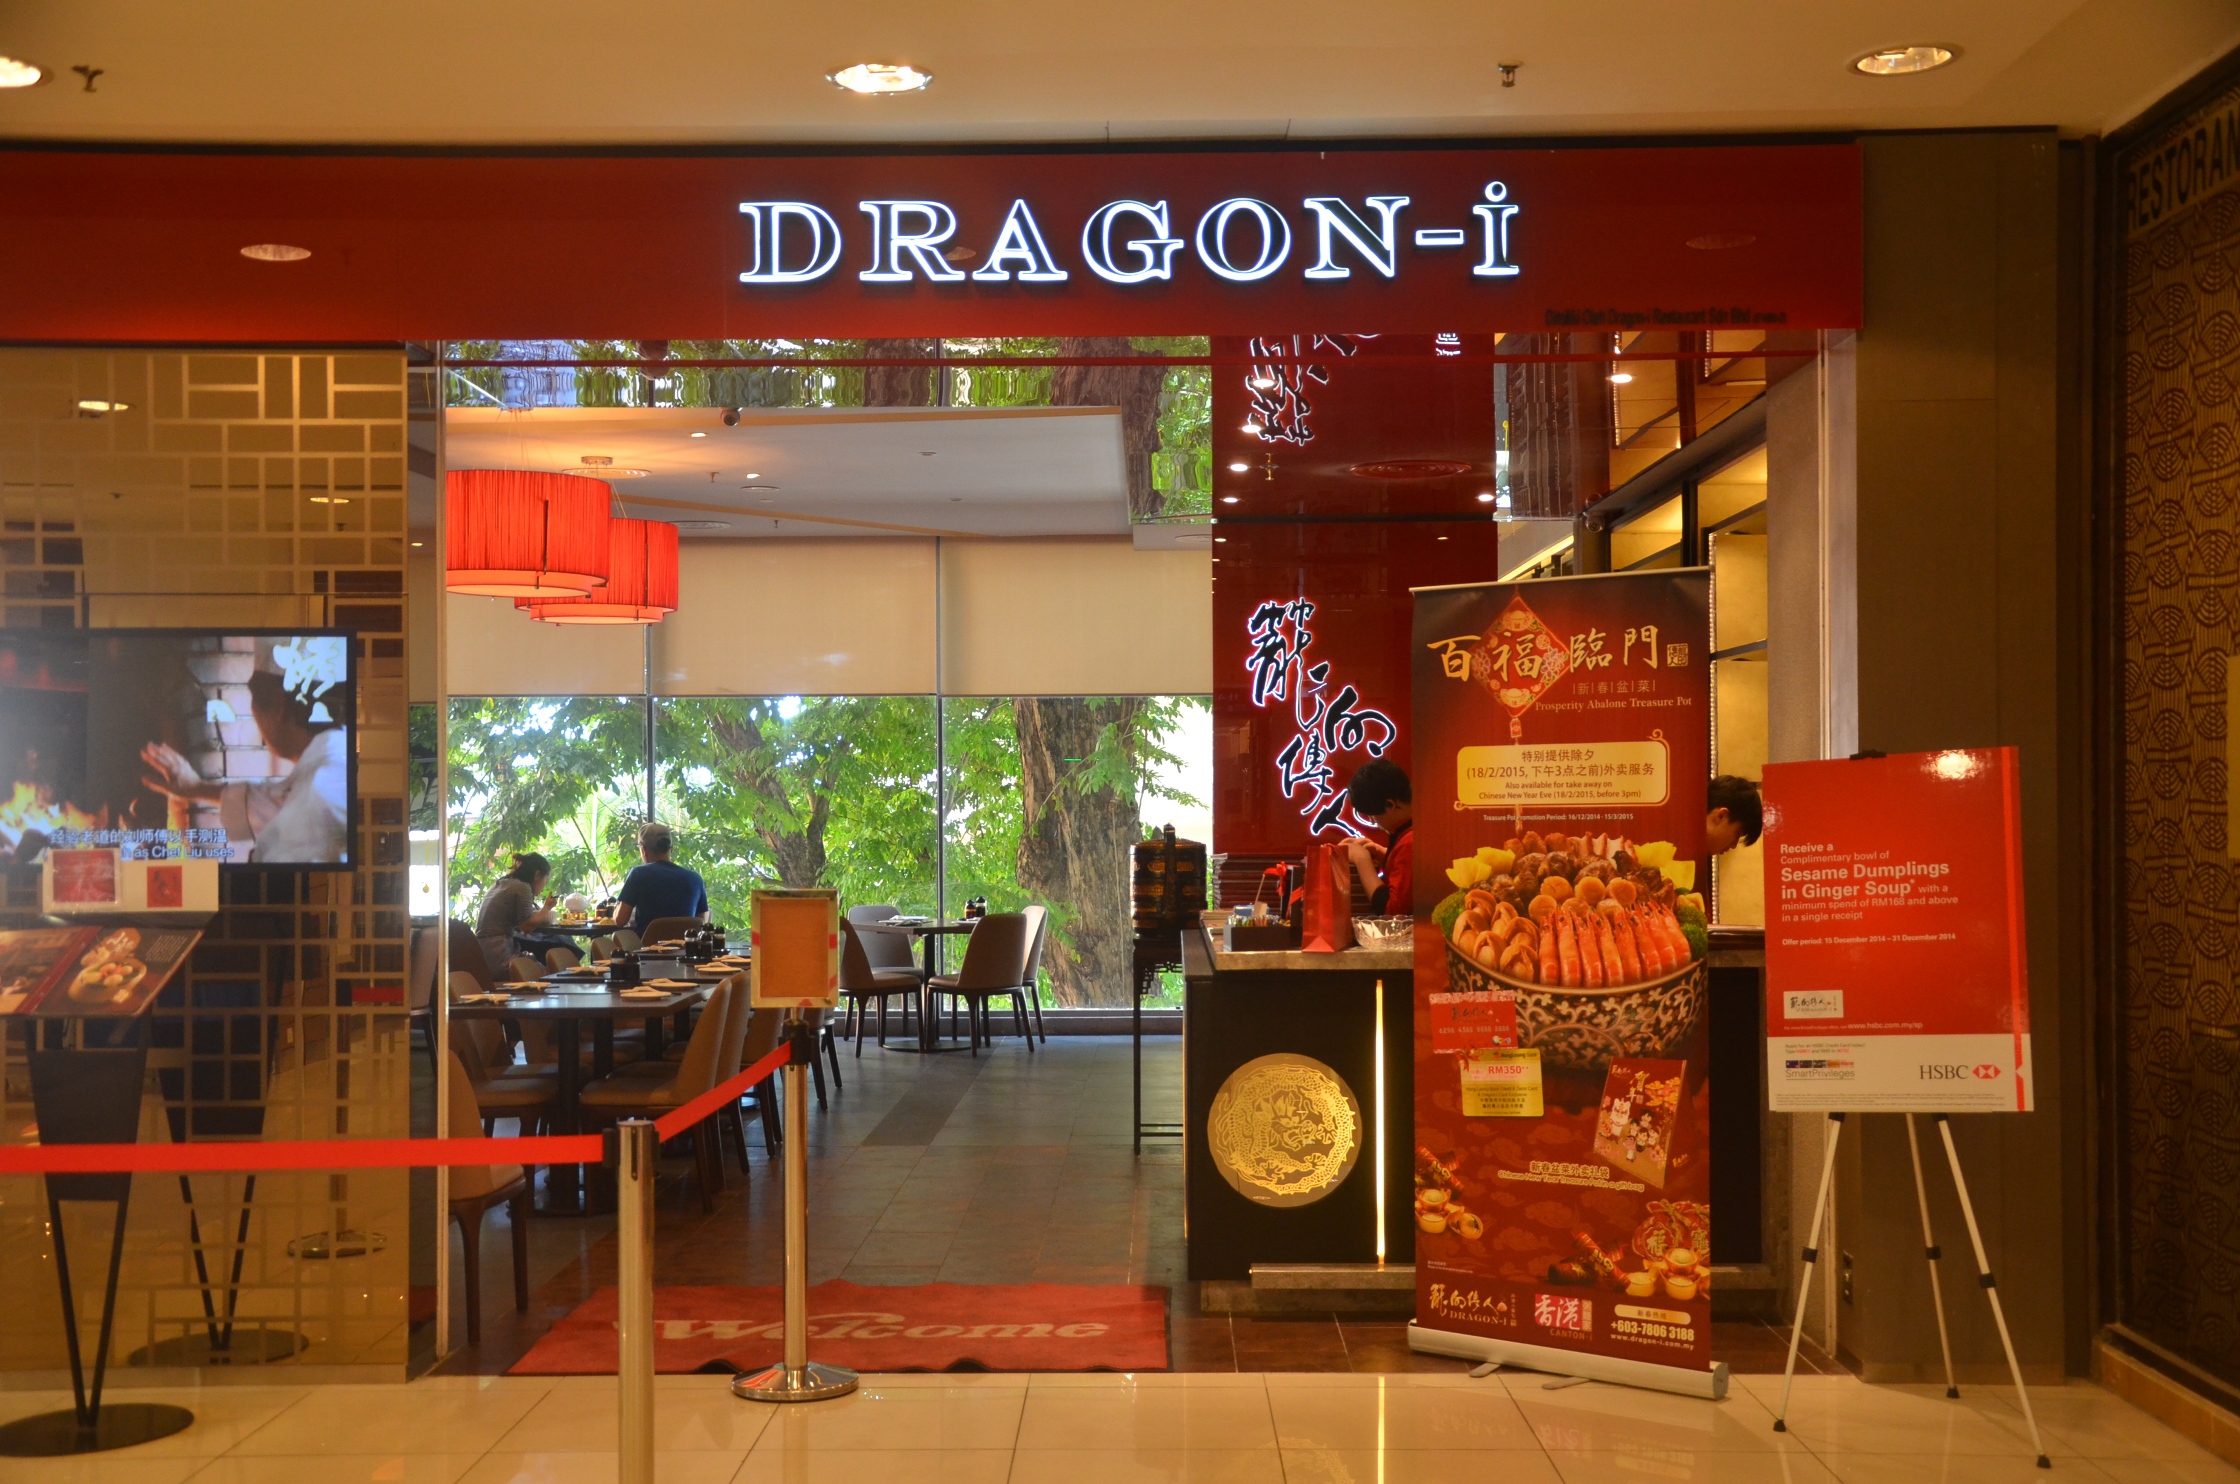 dragon city menu bay plaza